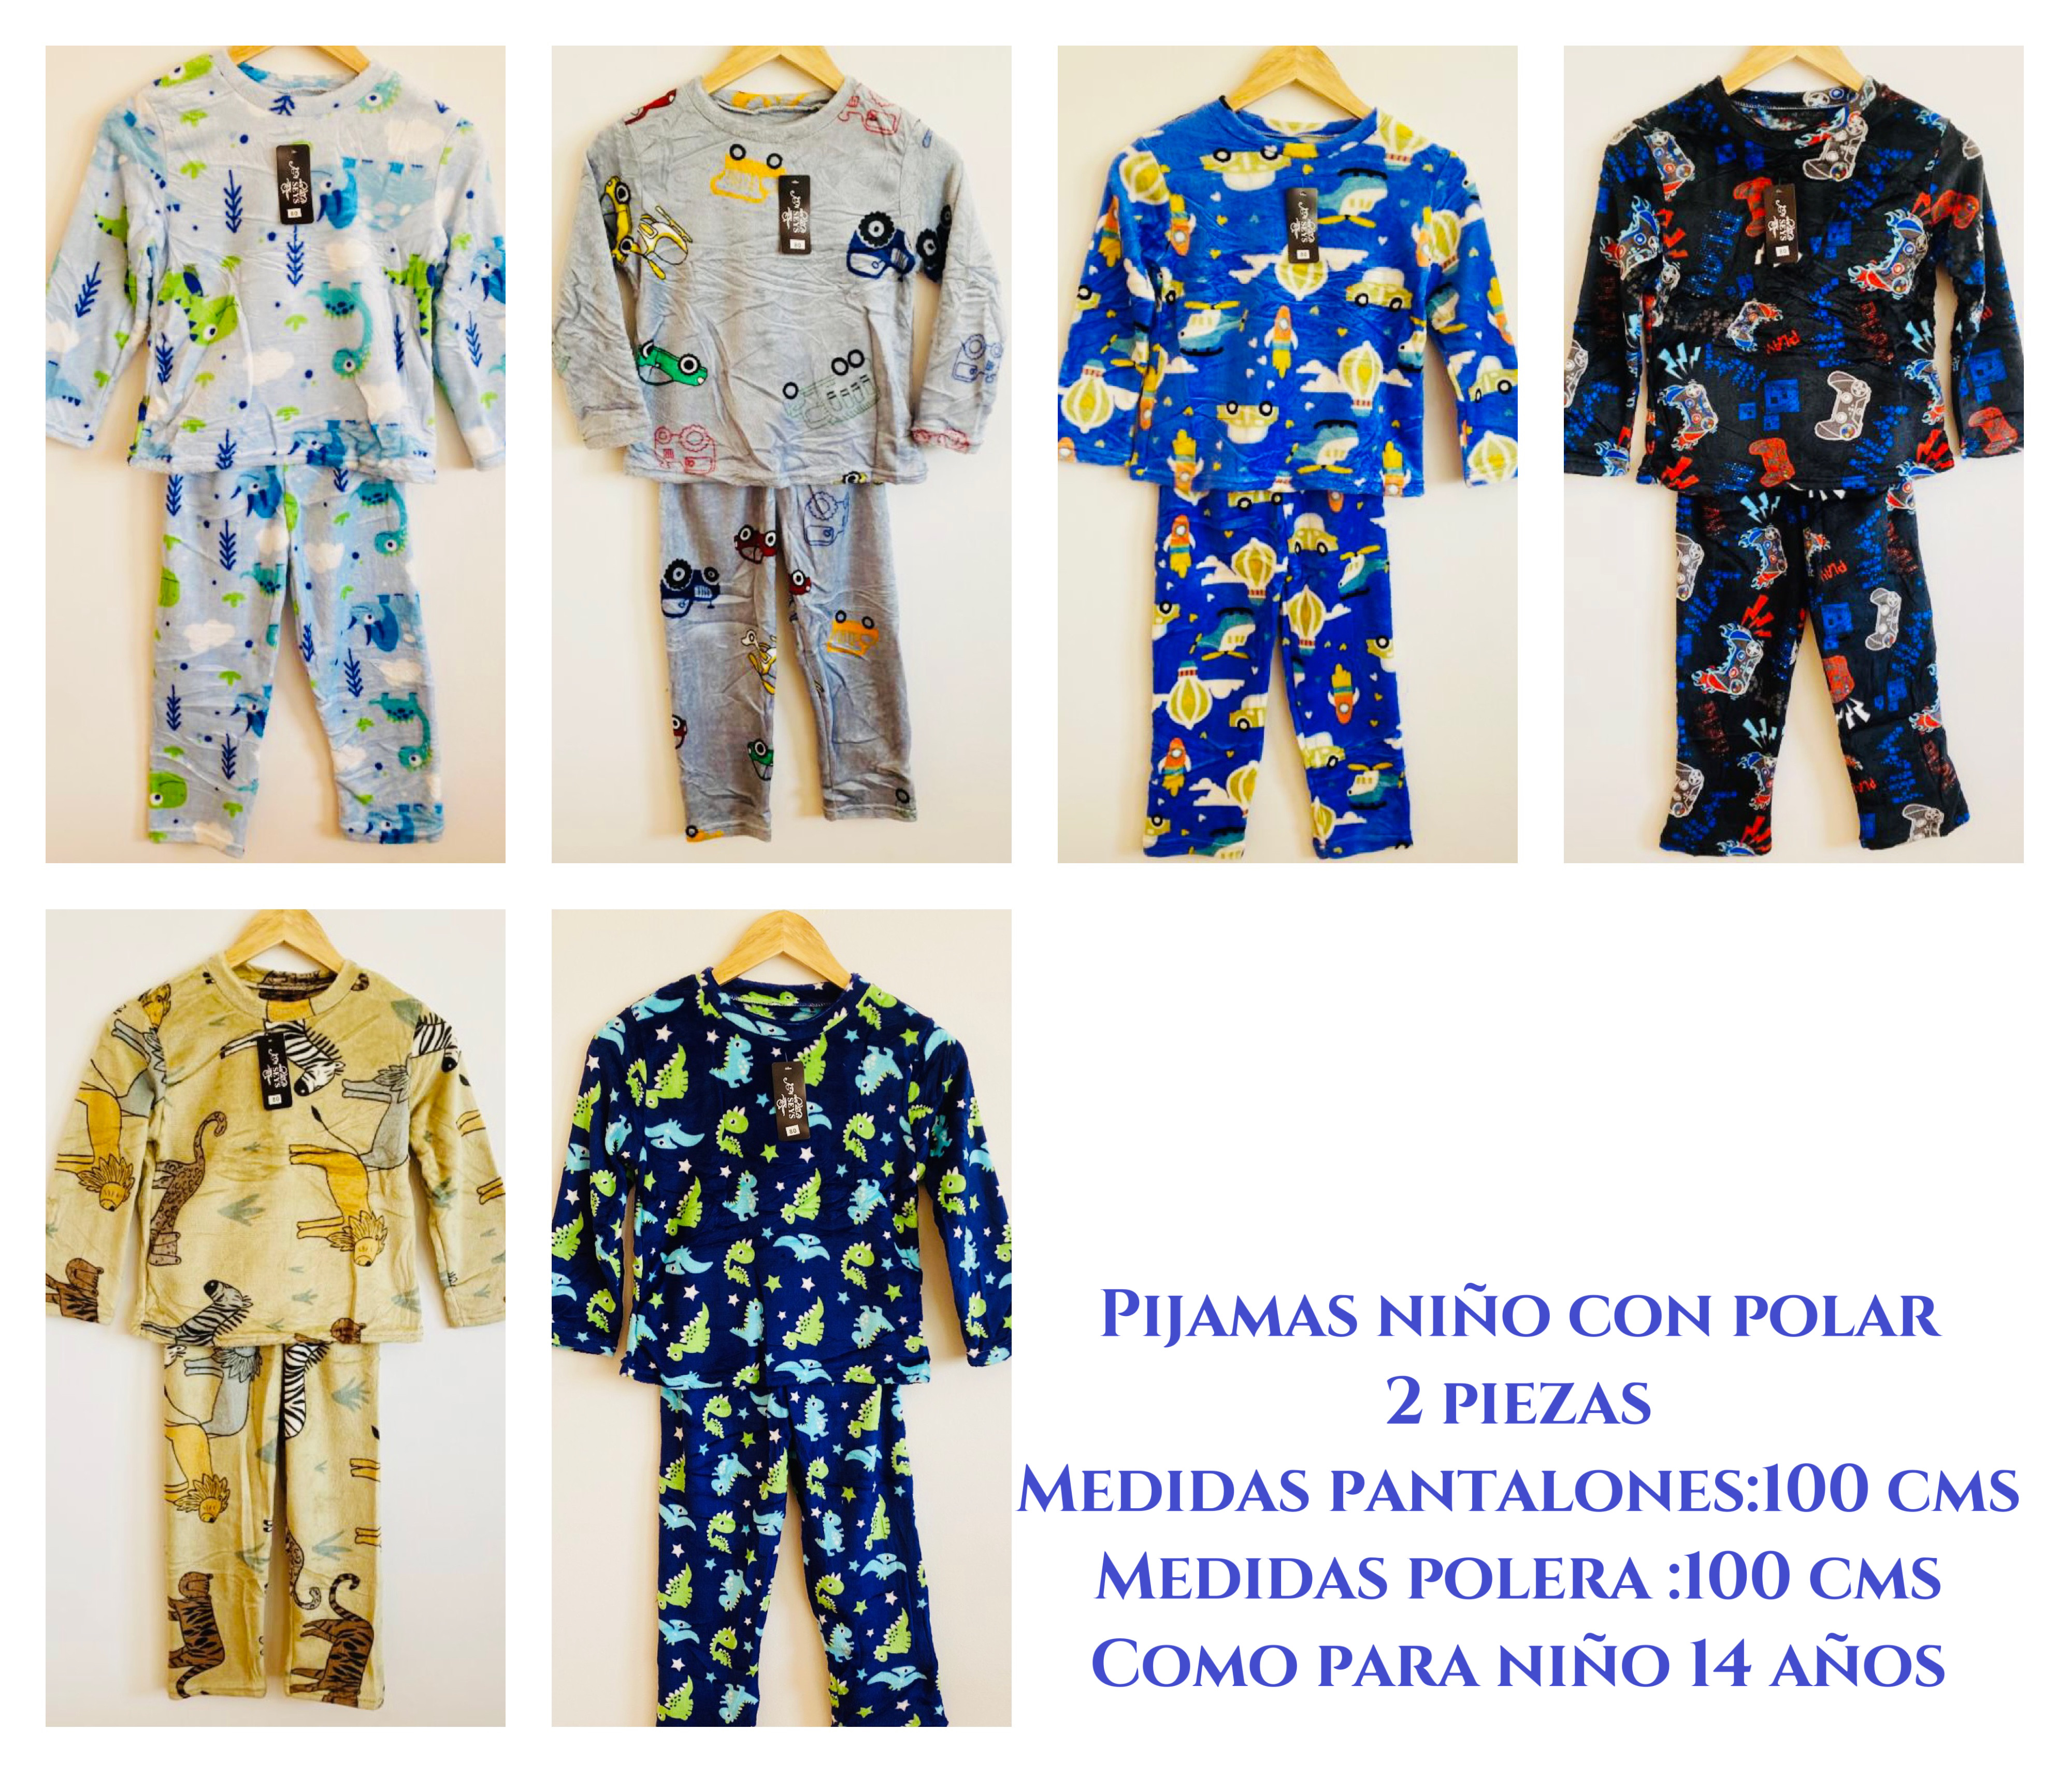 Pijamas niño juvenil con polar talla única como para 14 años